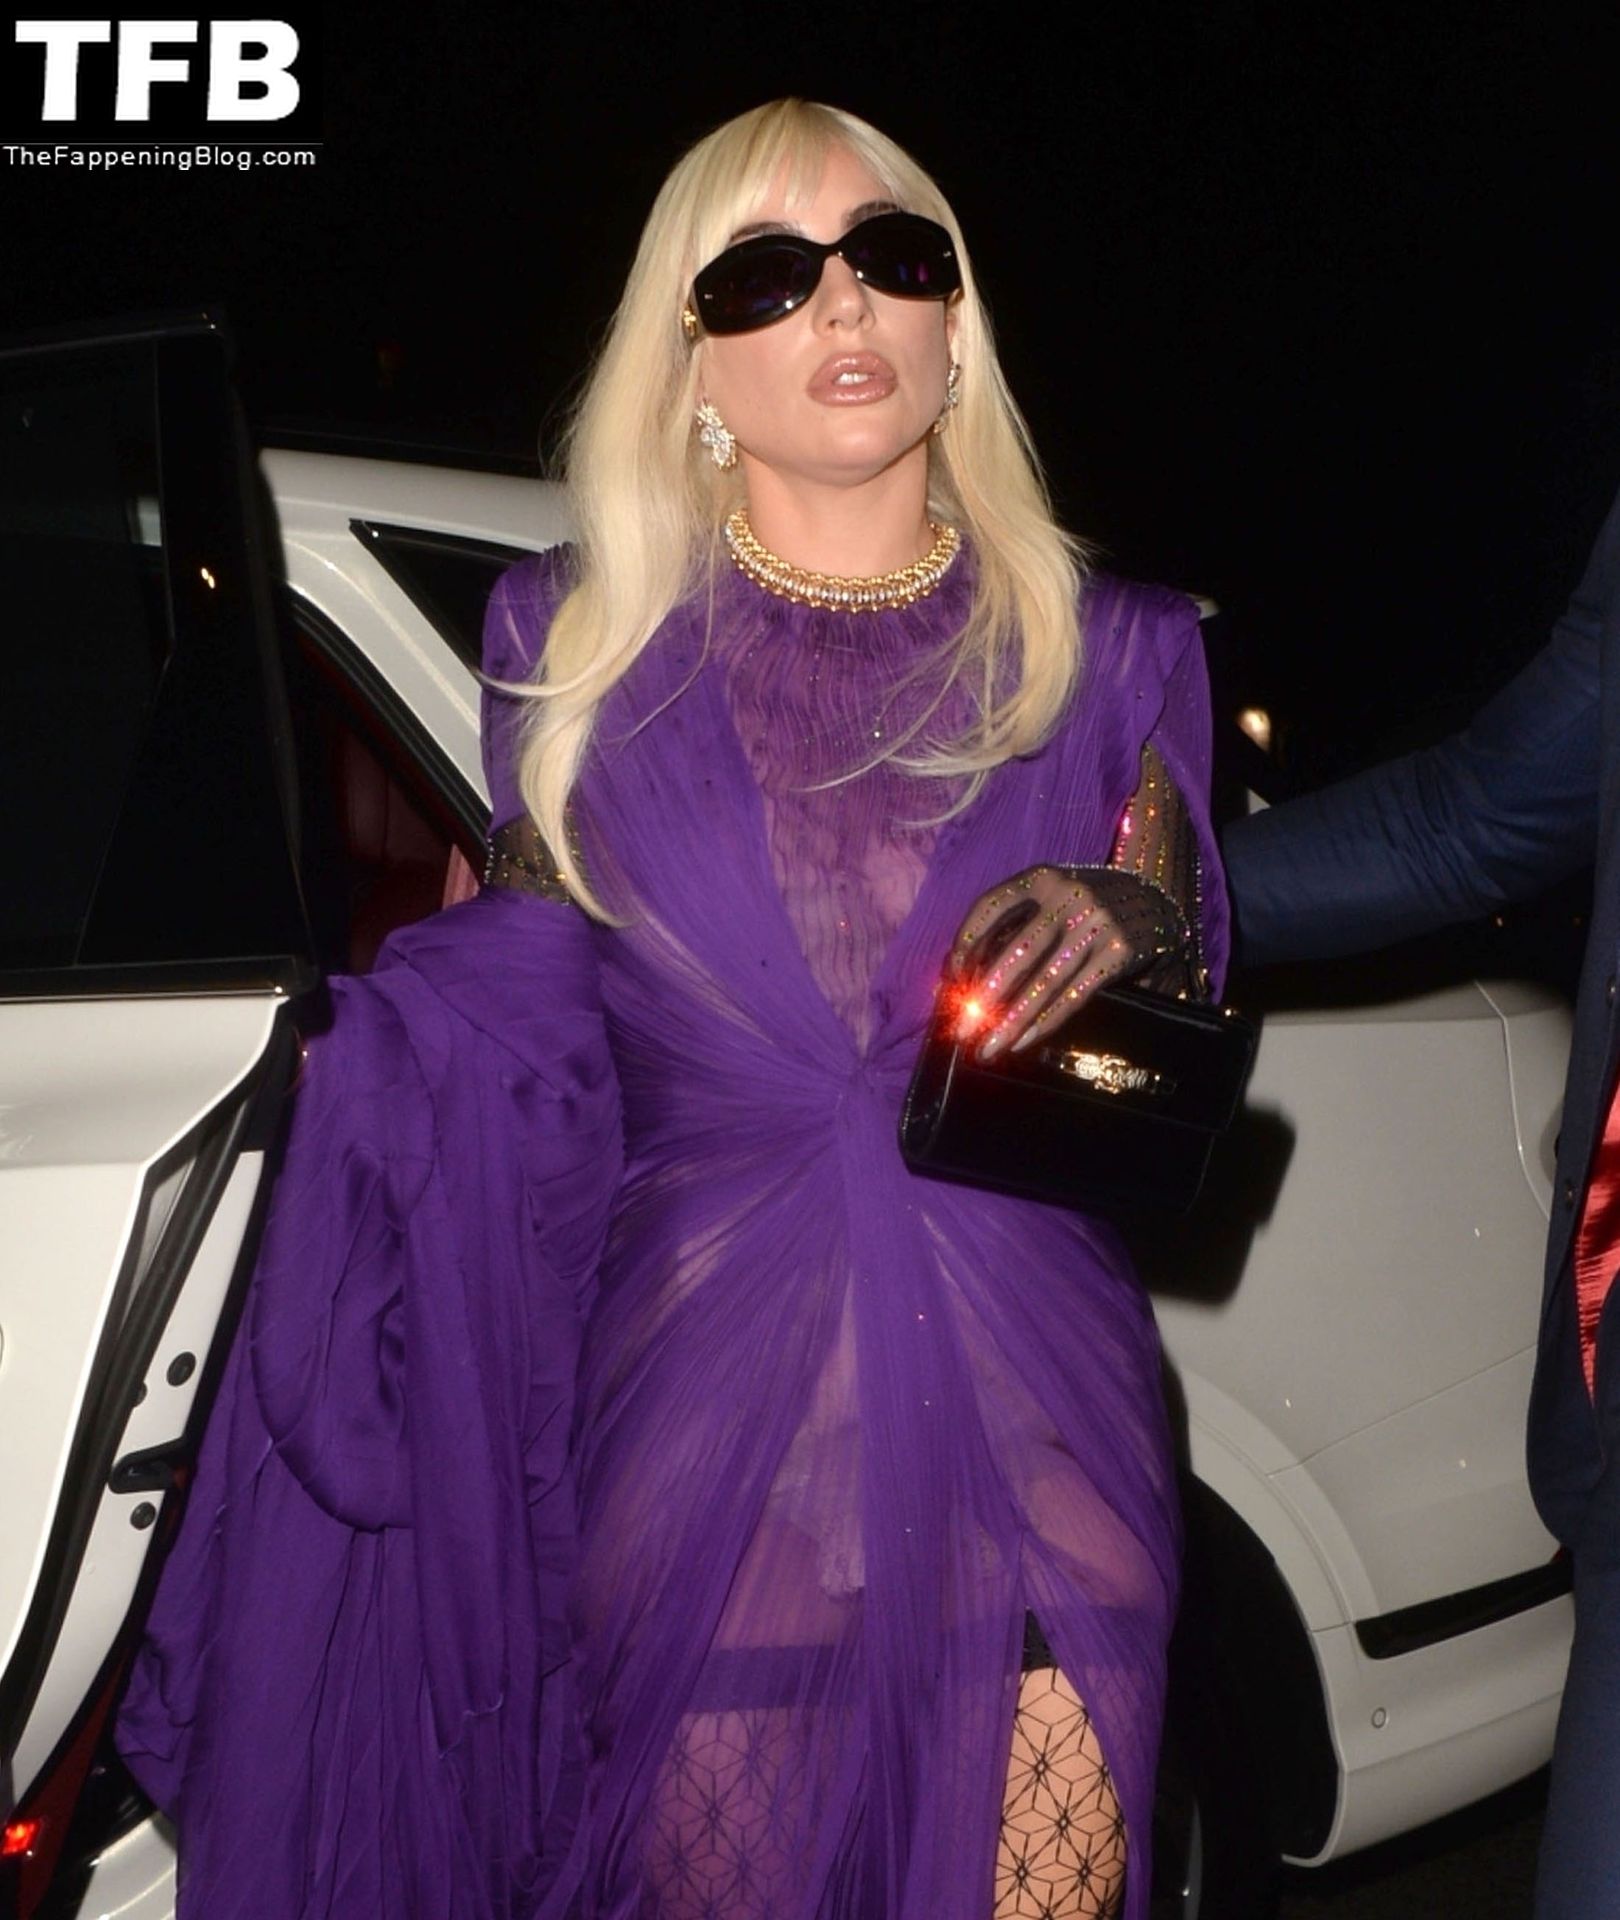 Lady-Gaga-Sexy-The-Fappening-Blog-4.jpg